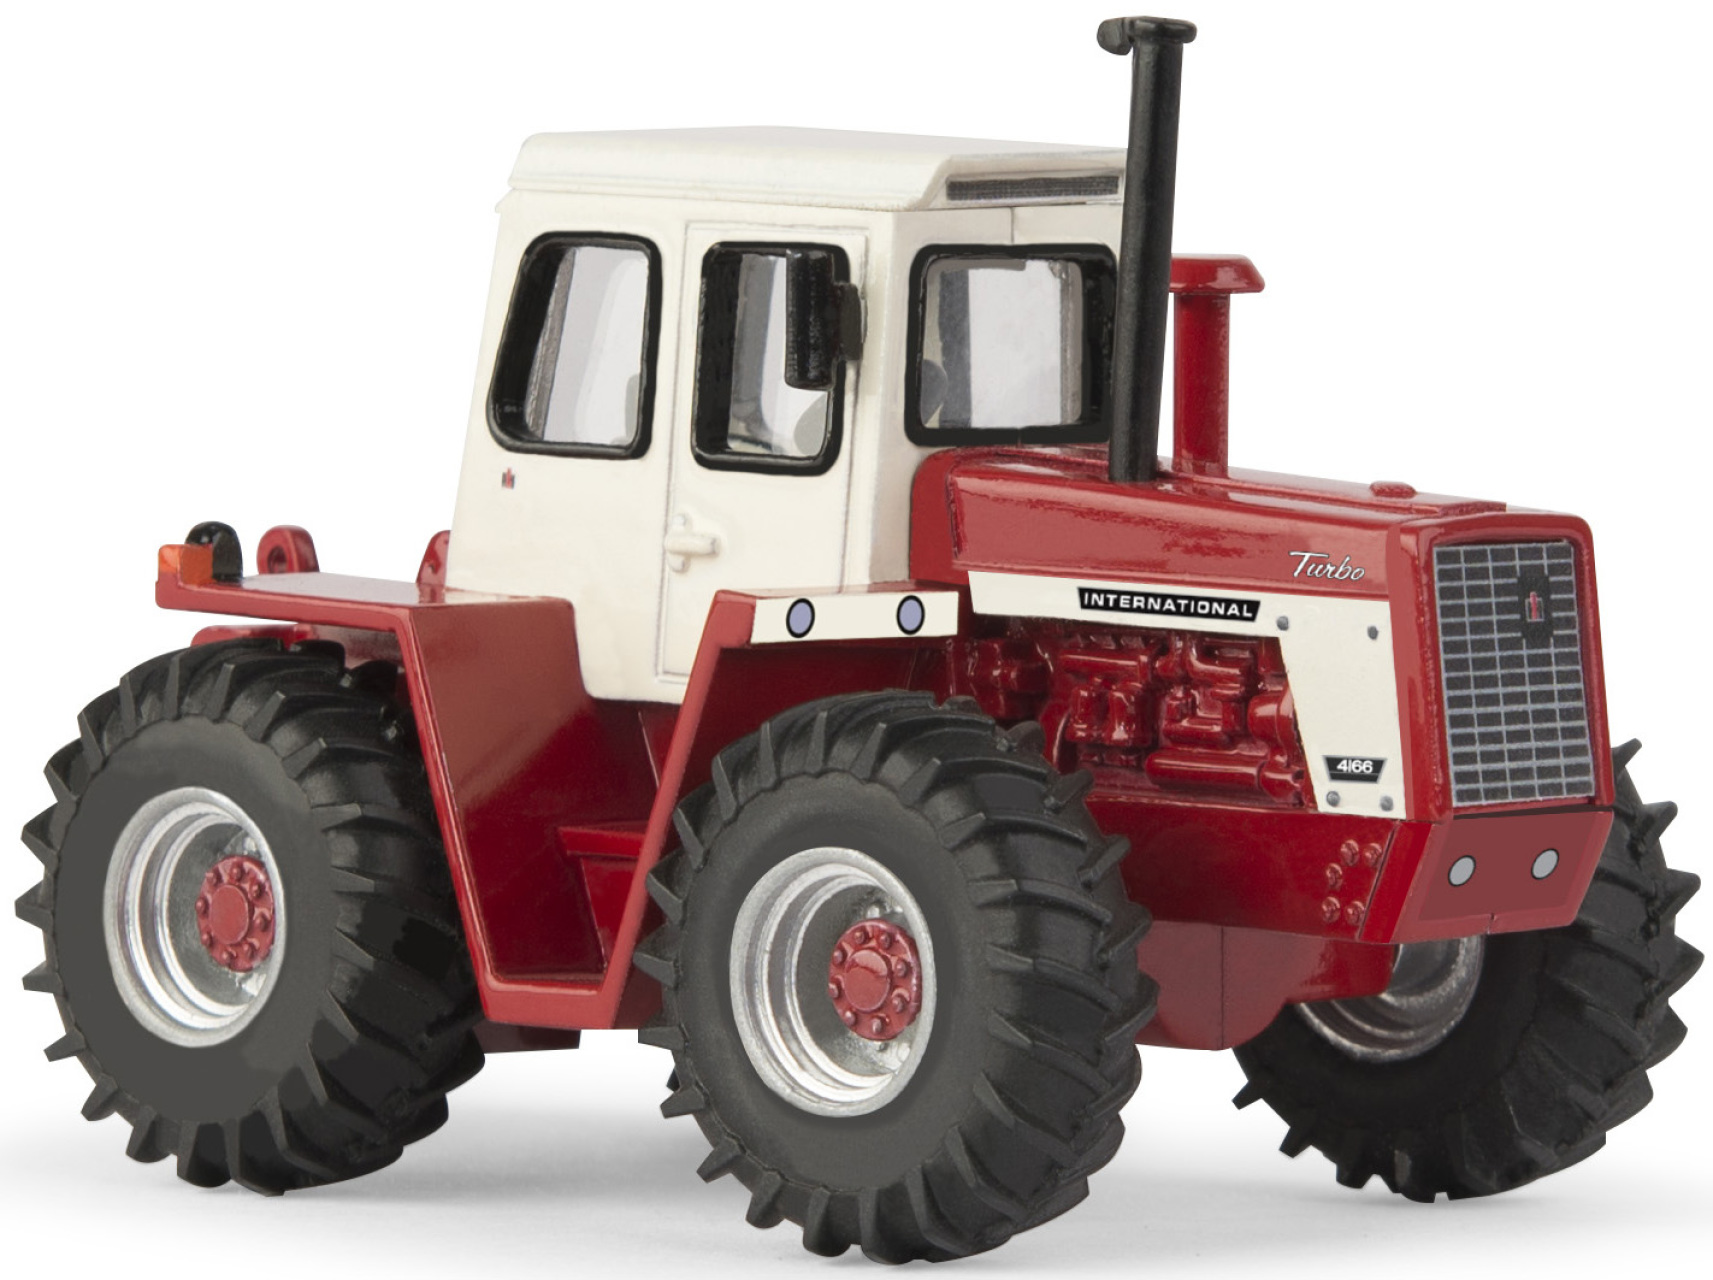 Tractor Models Toy Farmer